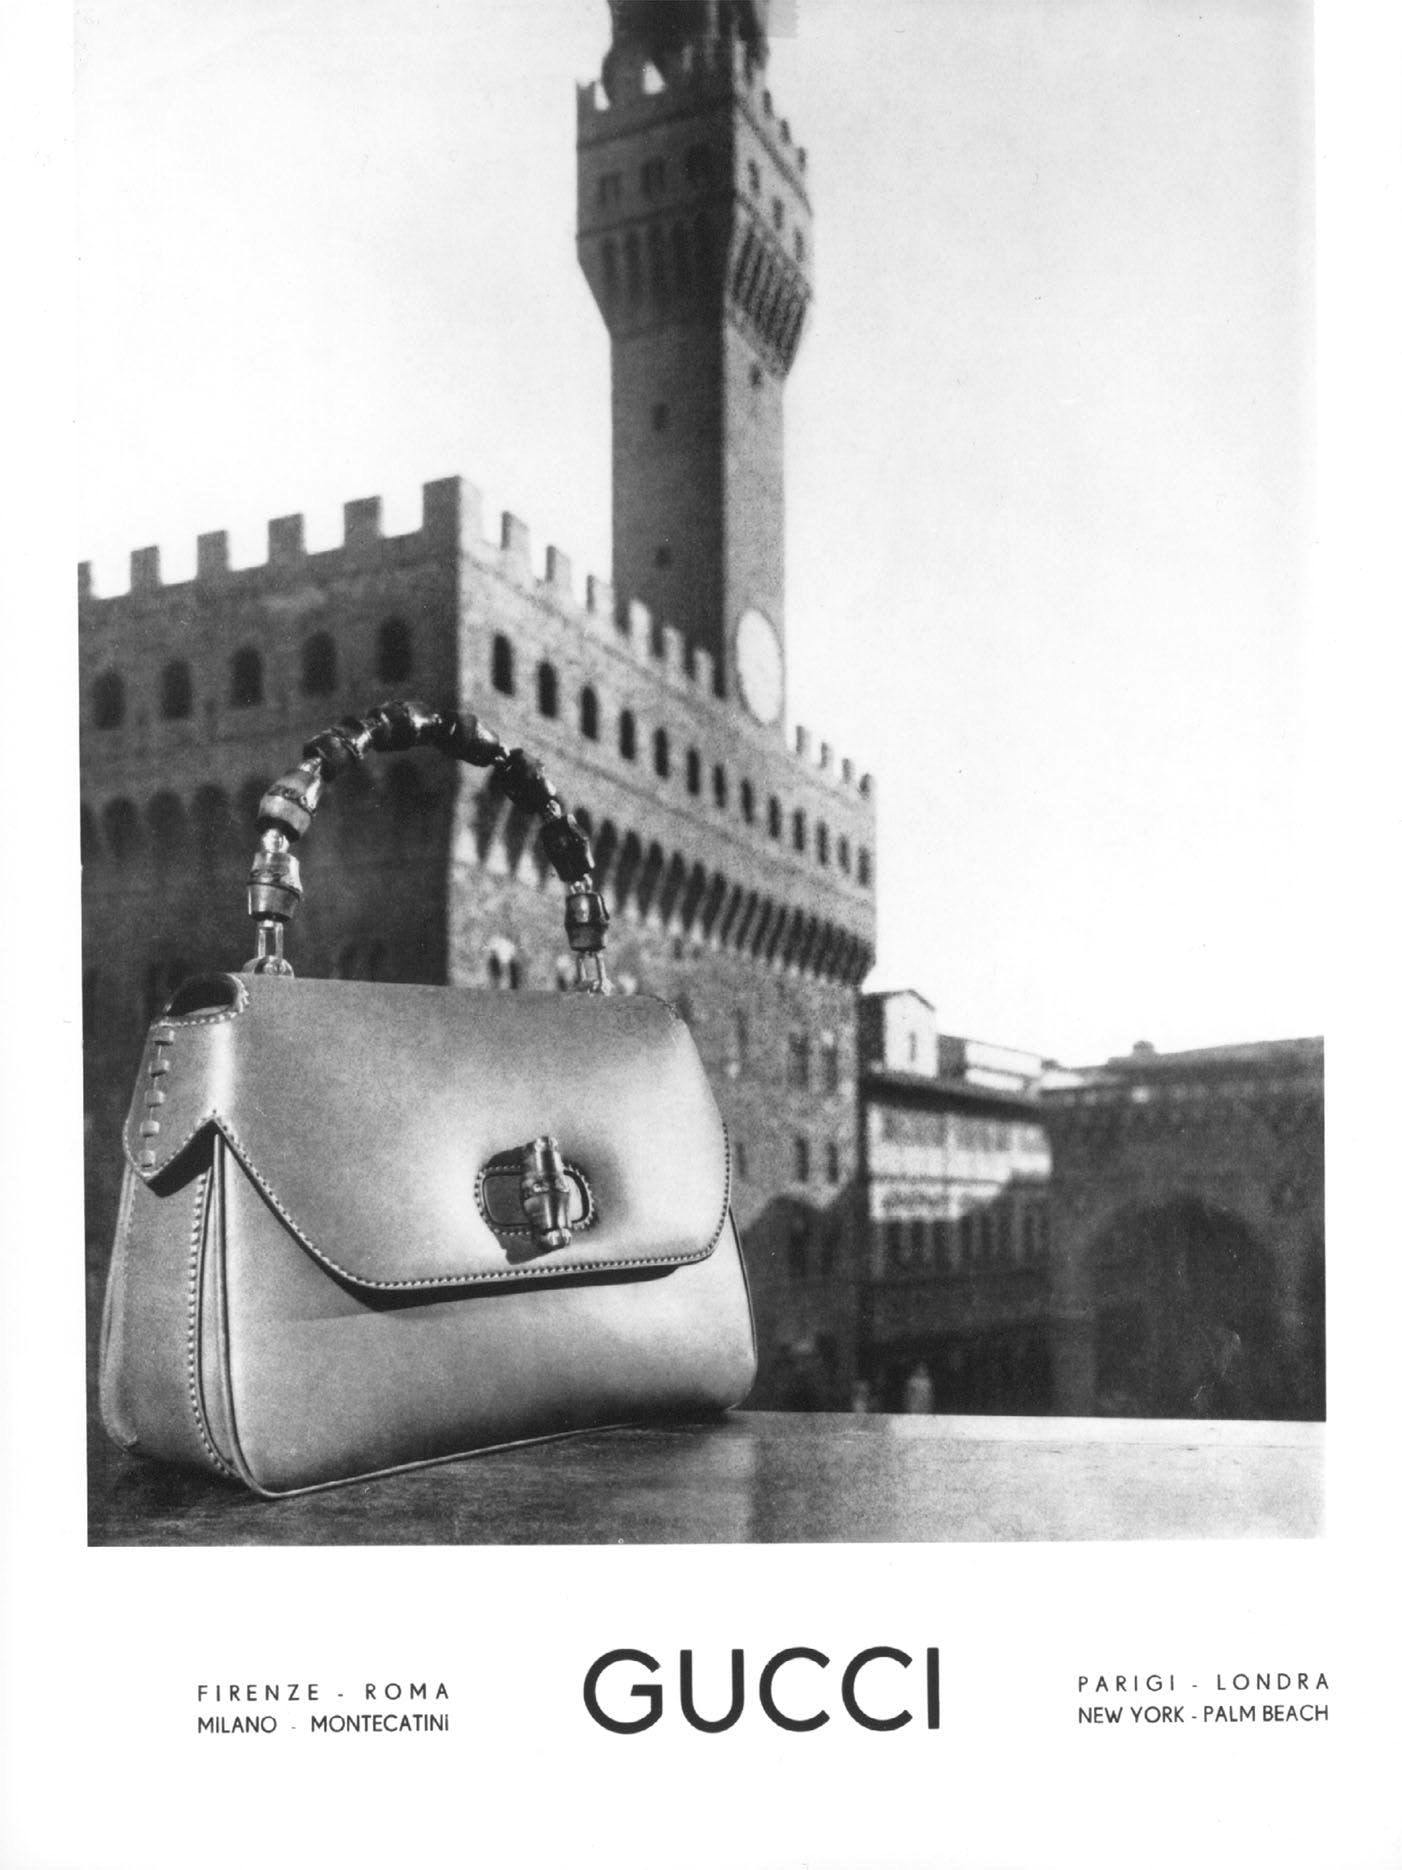 handbag bag accessories accessory purse tower building architecture